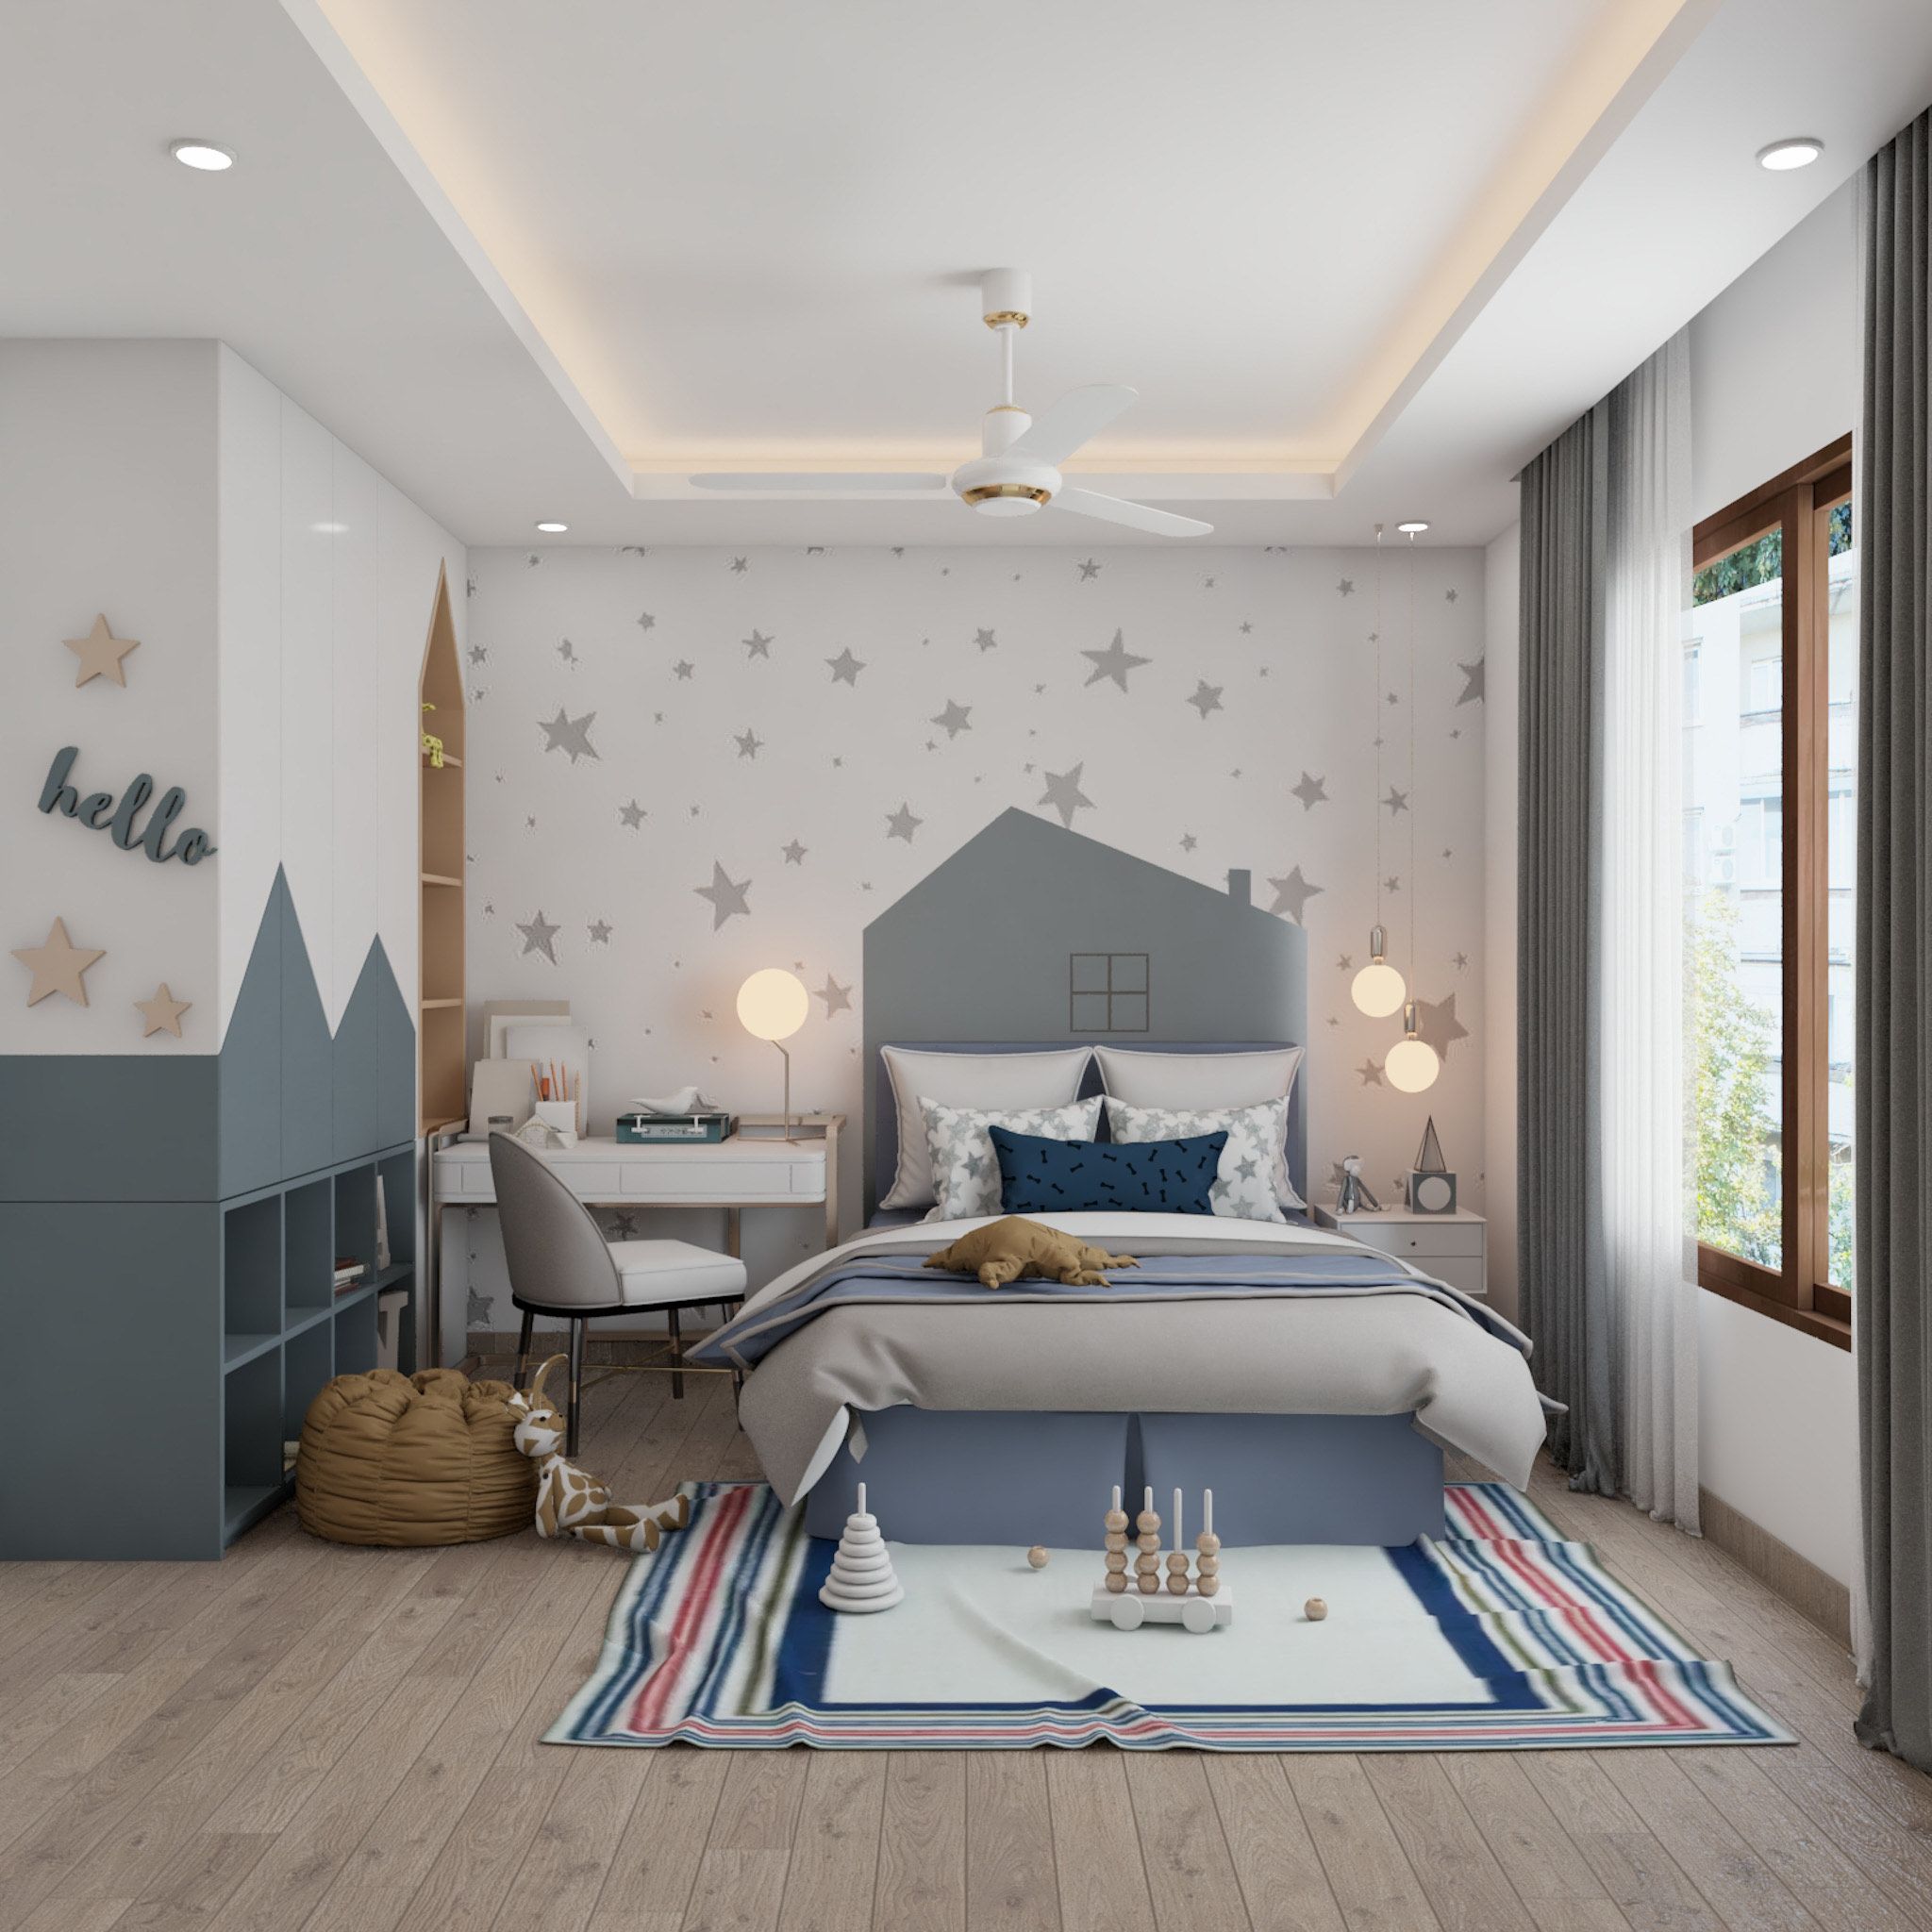 Modern Kids Bedroom Design With Recessed Lighting